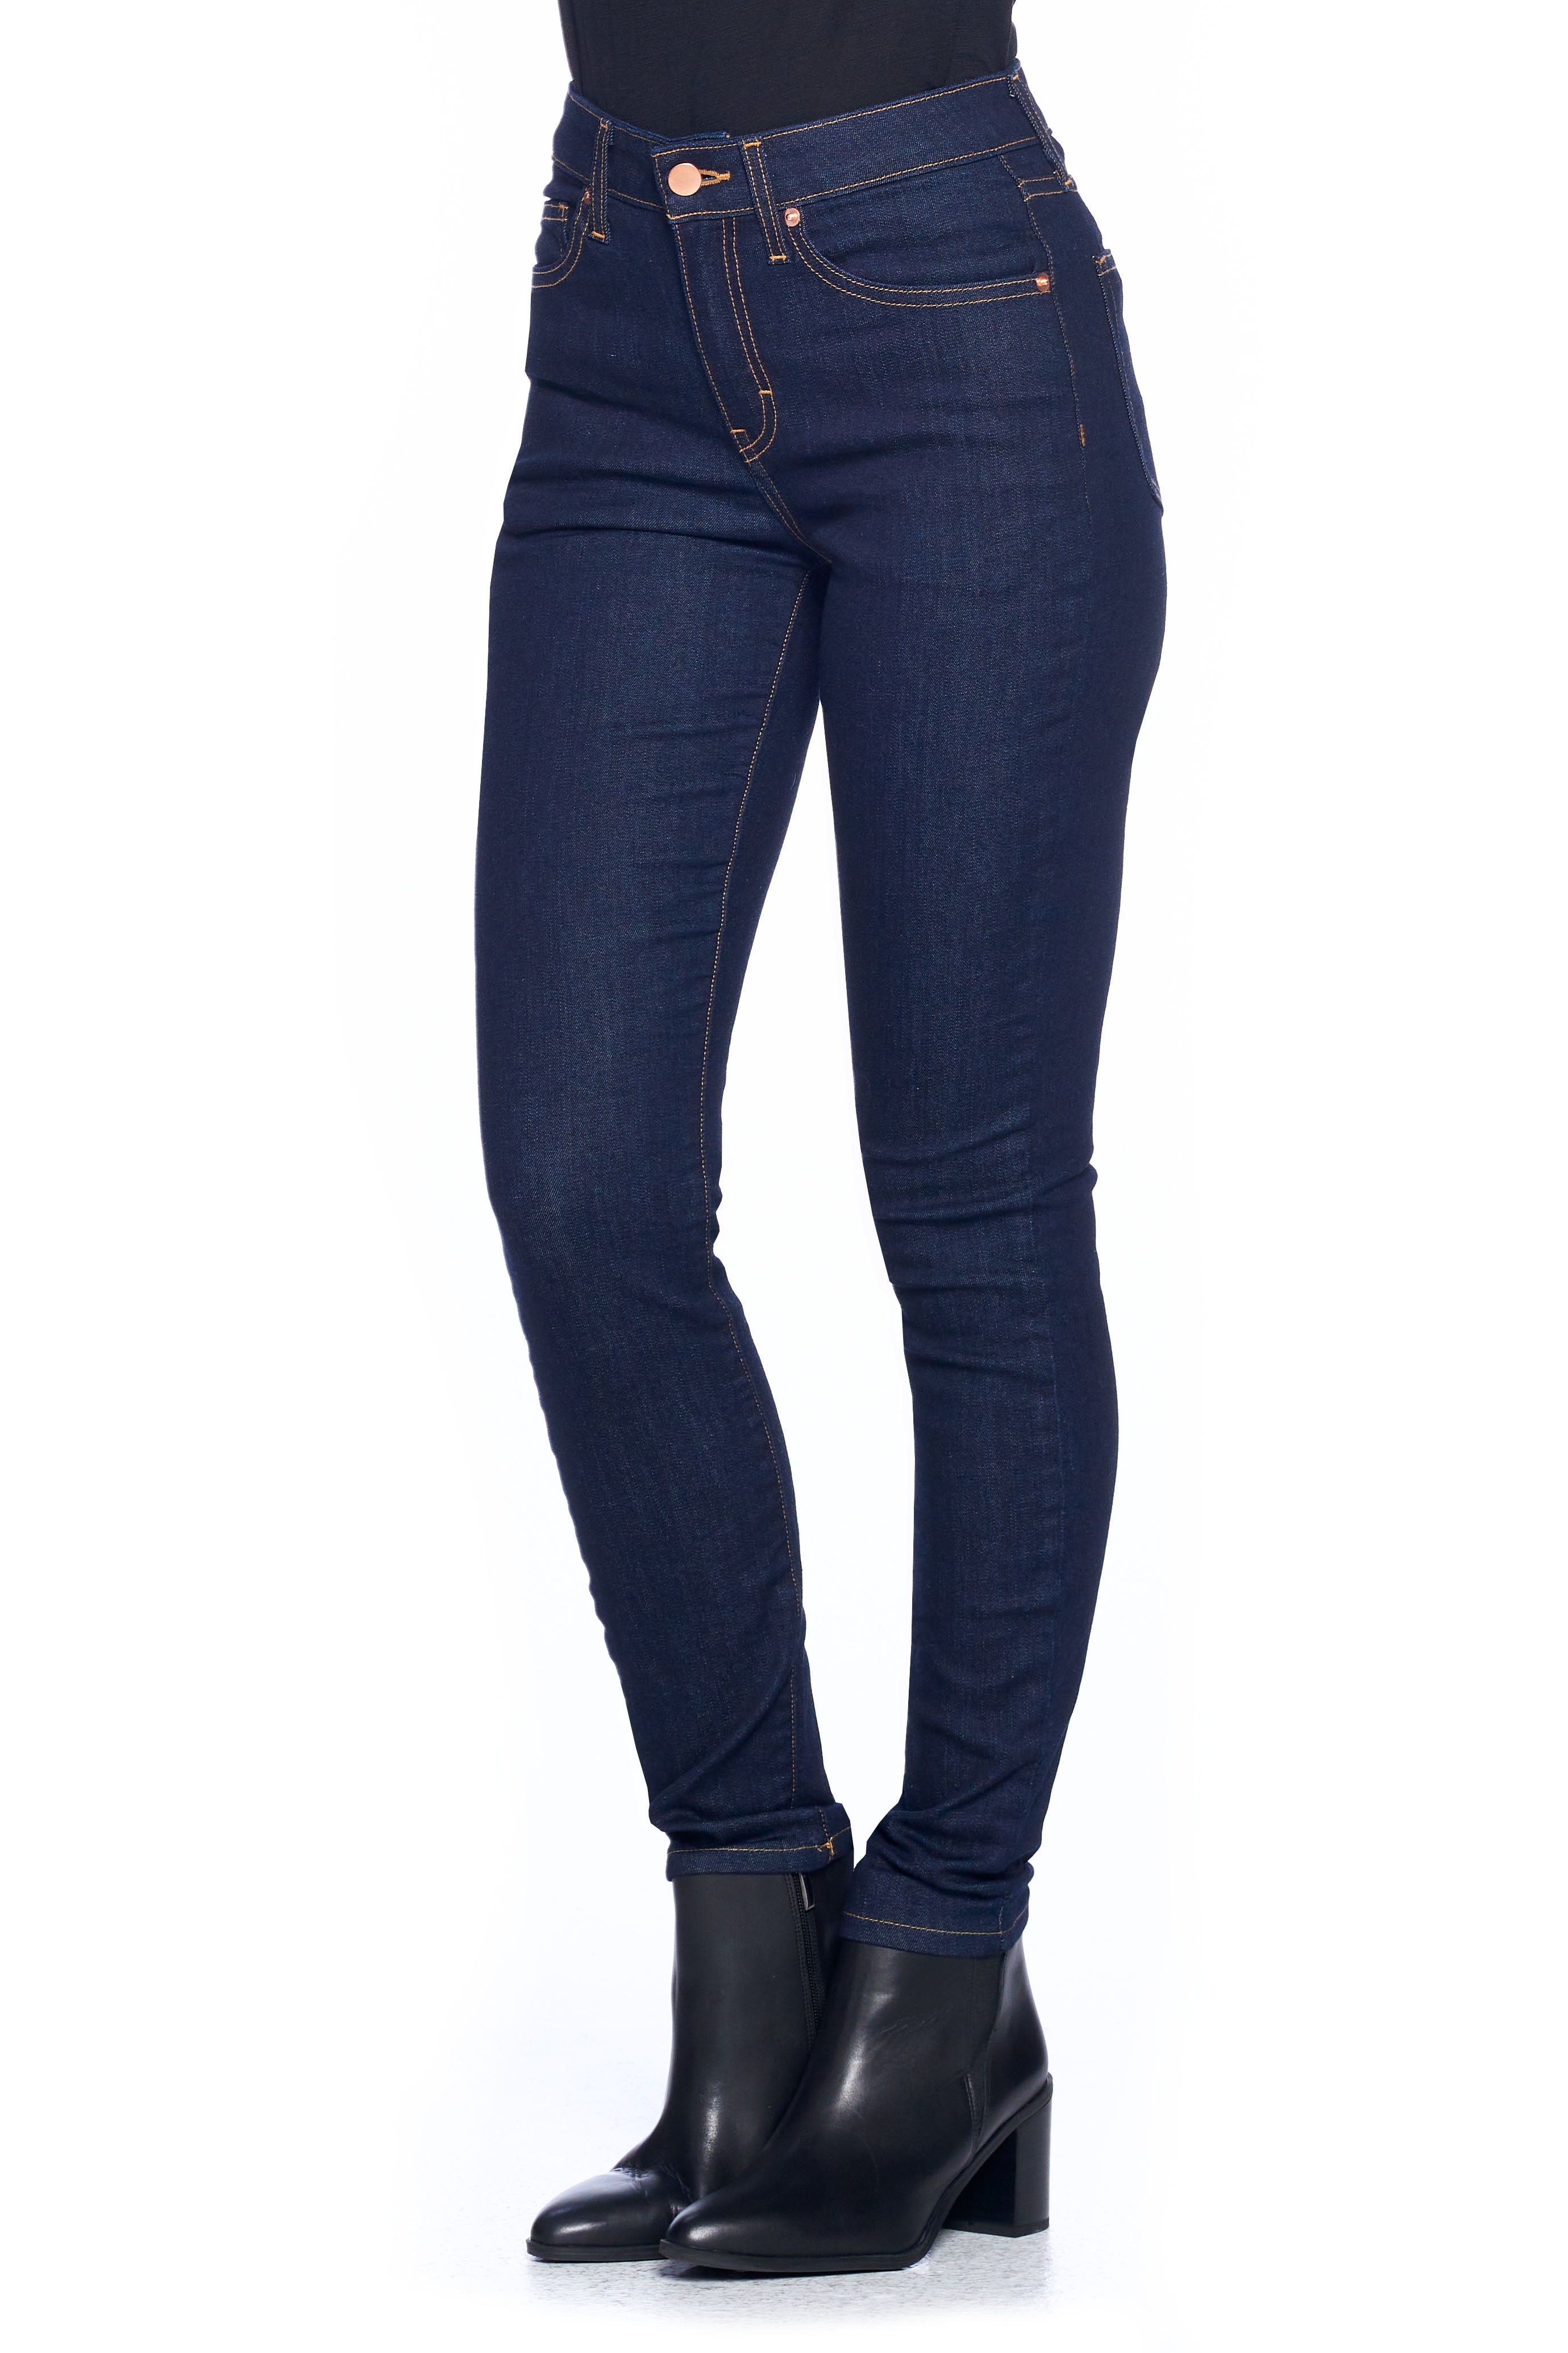 Women\'s Comfort Skinny Fit Jeans in Aviator Made Dark the | Indigo | - USA